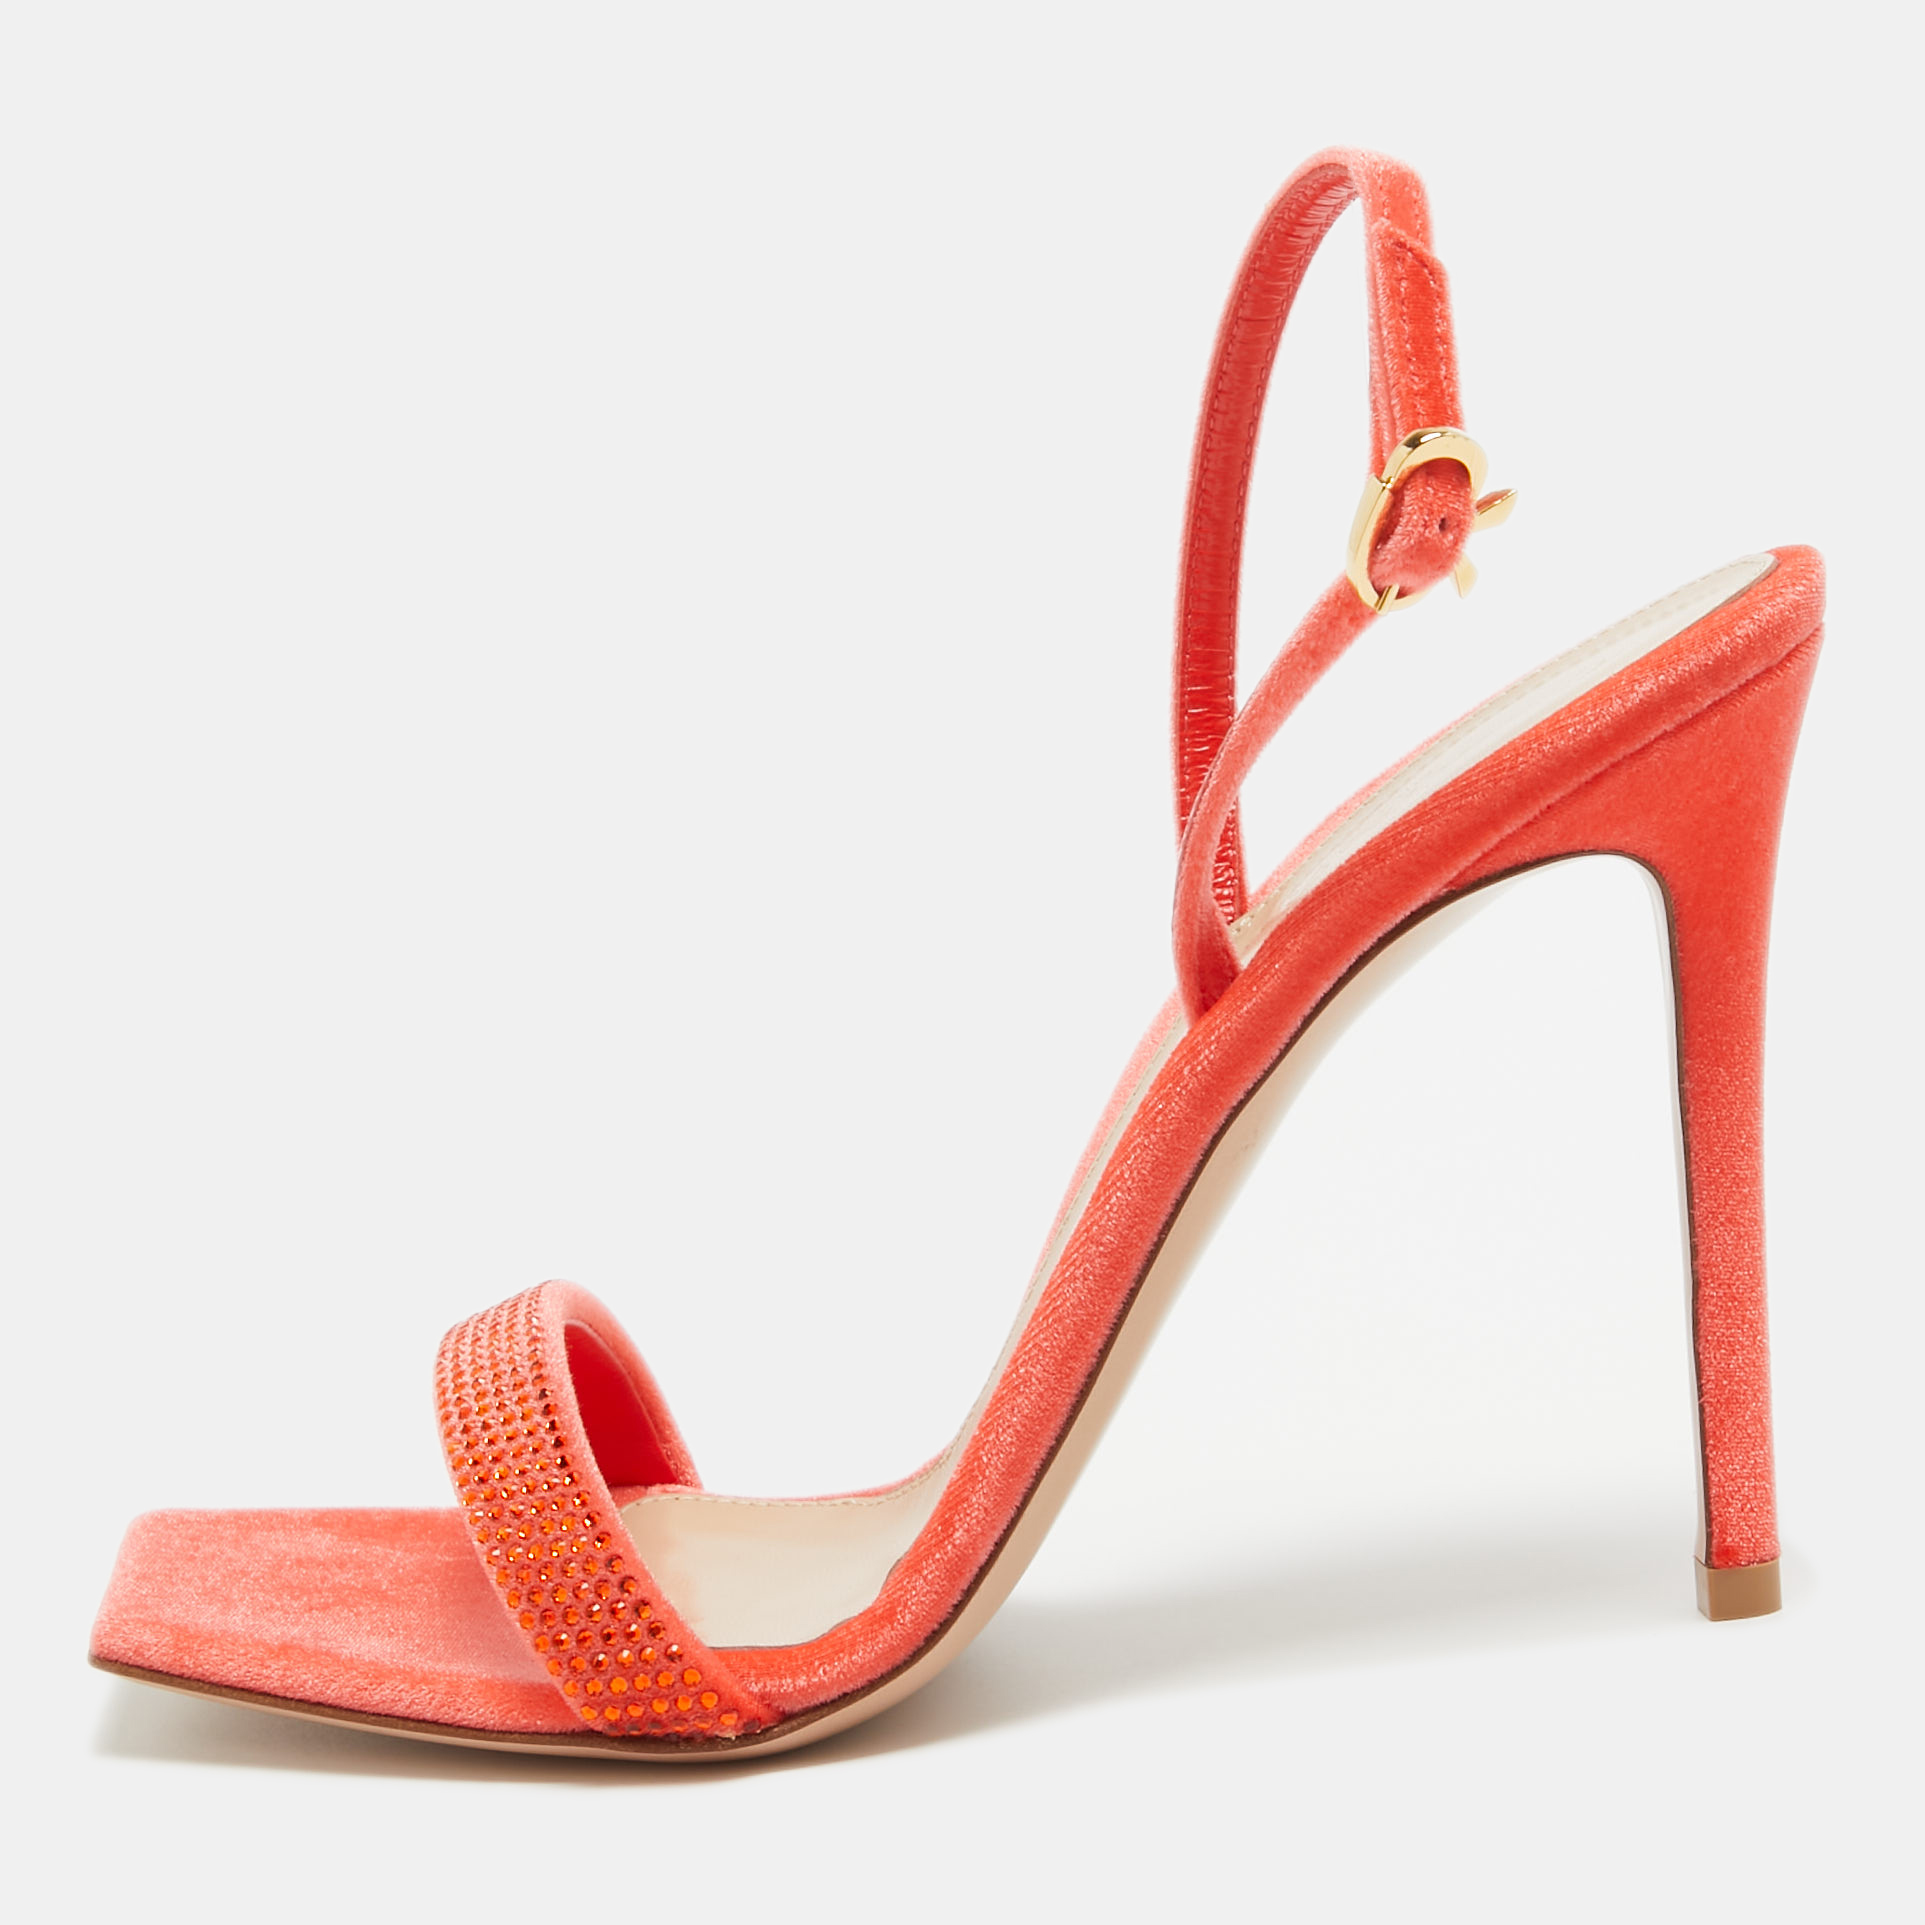 Gianvito rossi poppy red velvet embellished britney sandals size 38